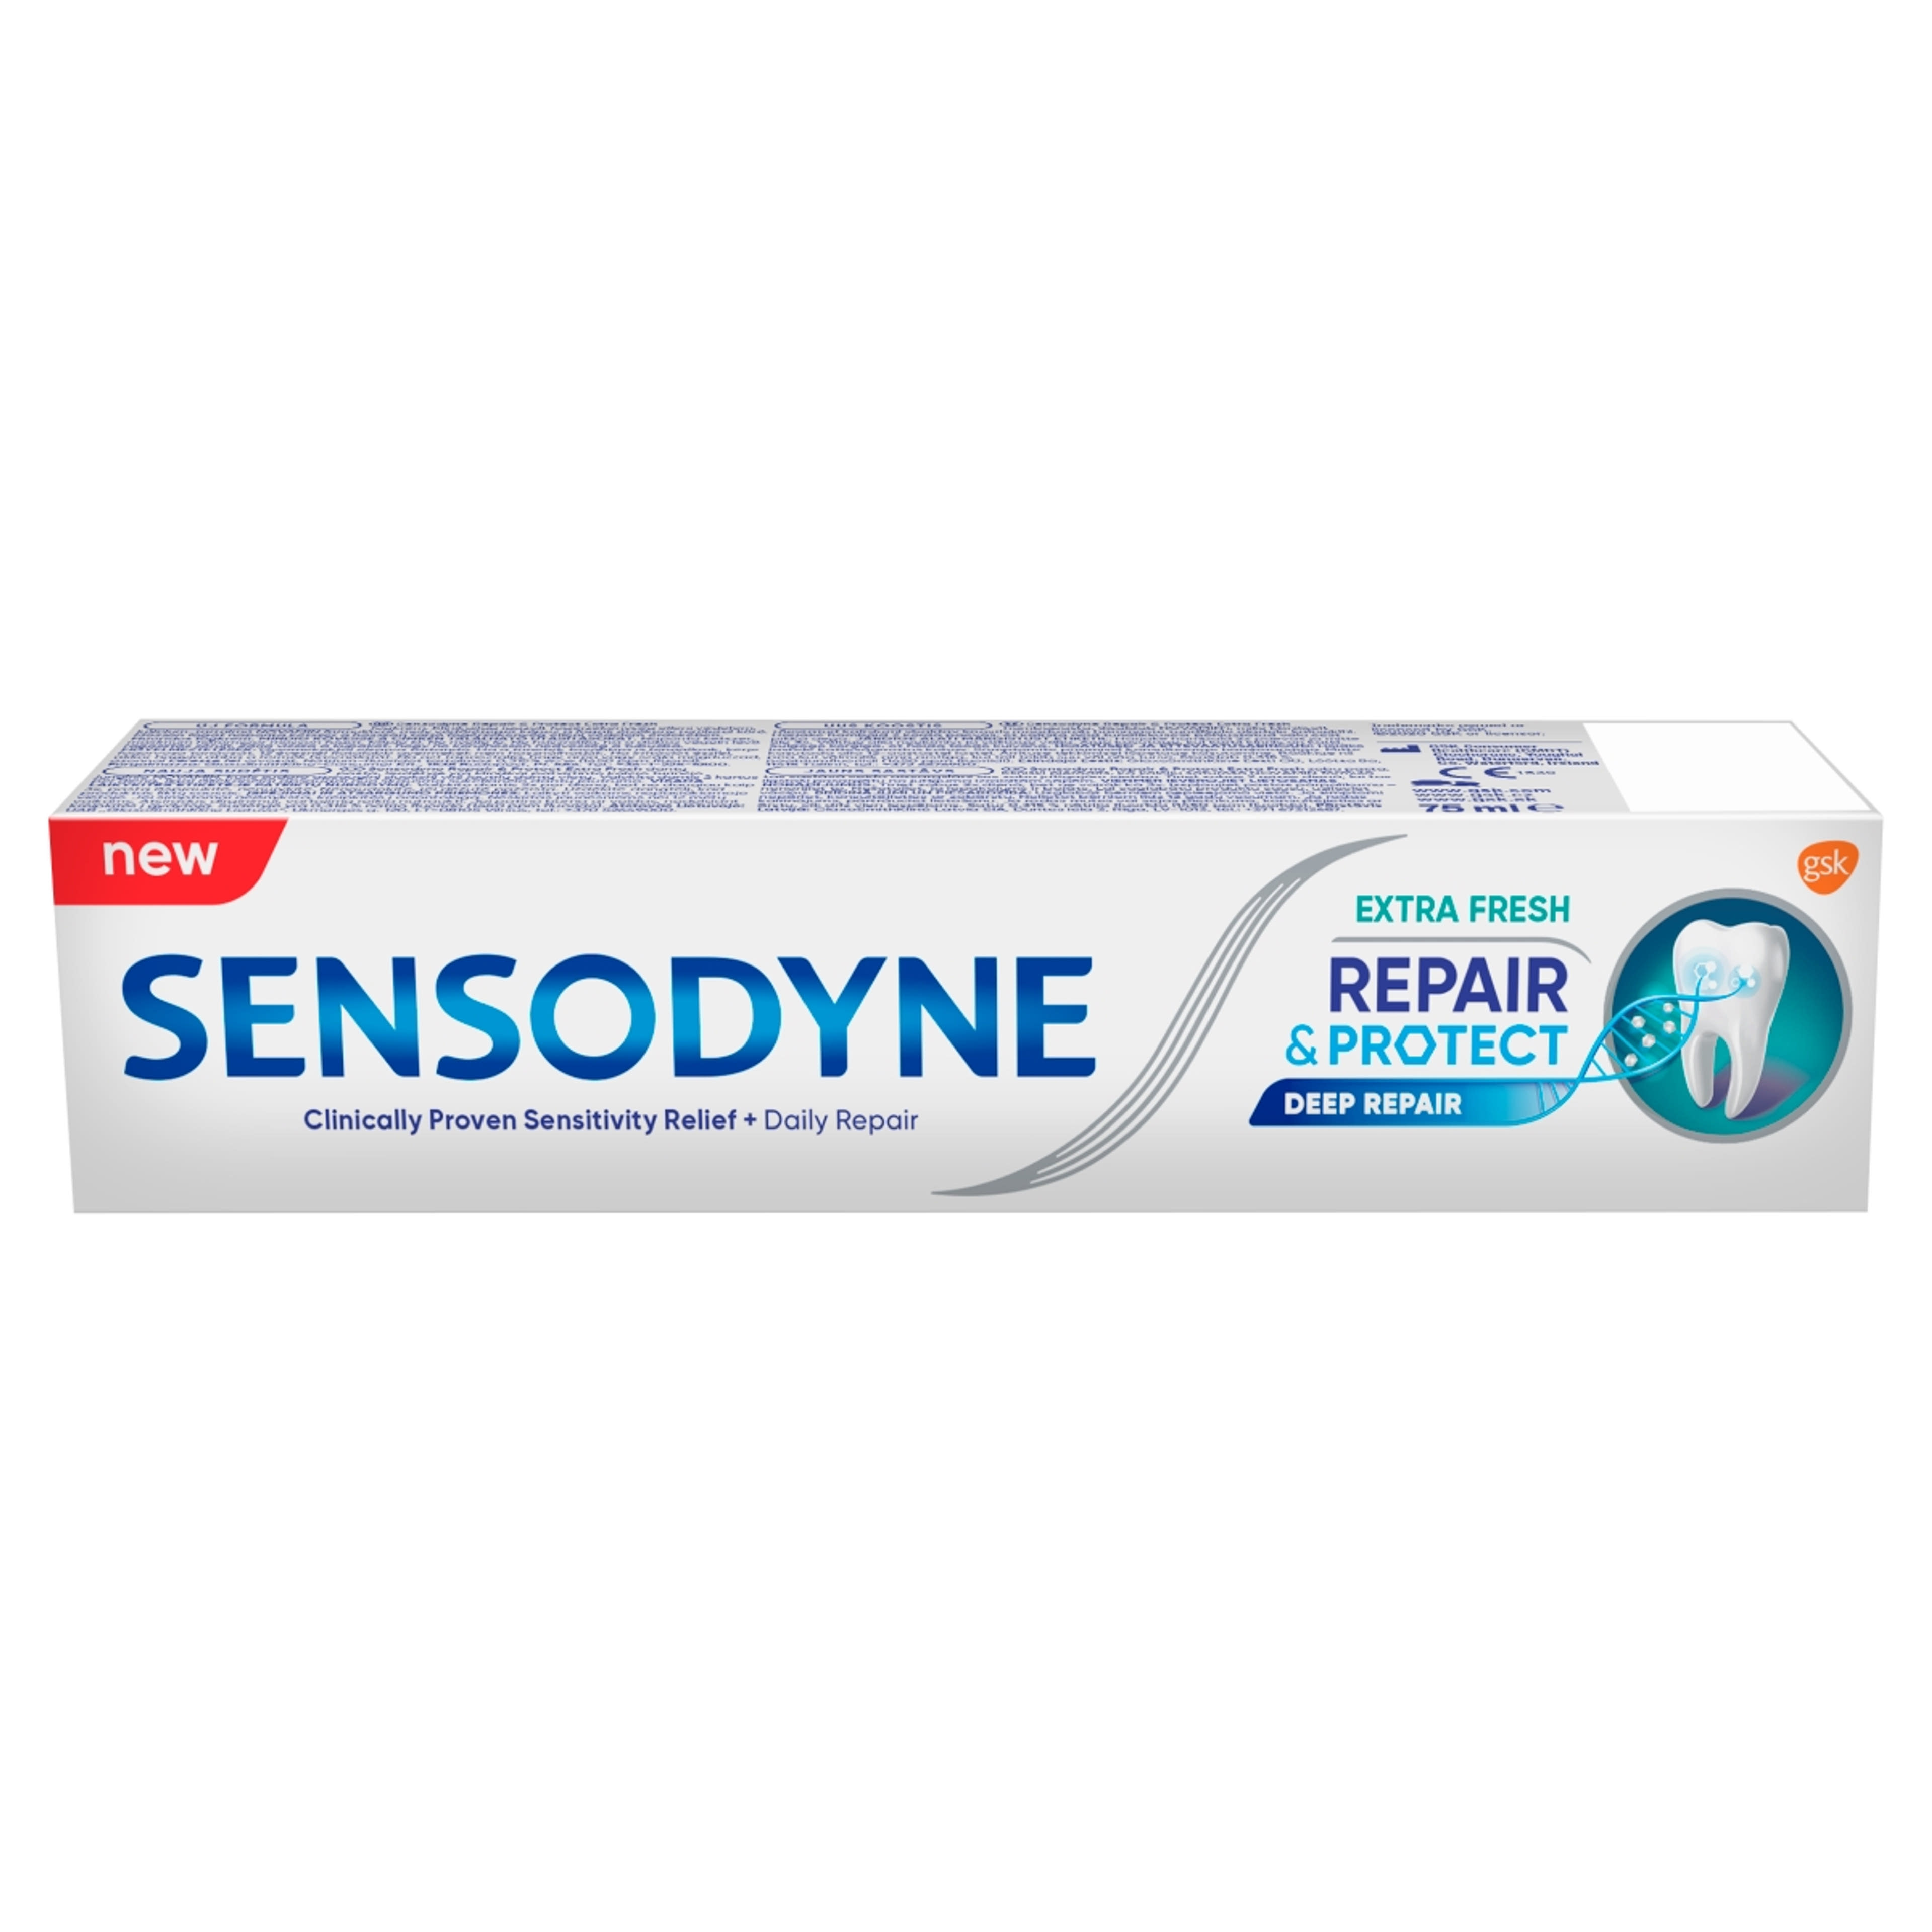 Sensodyne Repair & Protect Extra Fresh fogkrém - 75 ml-1